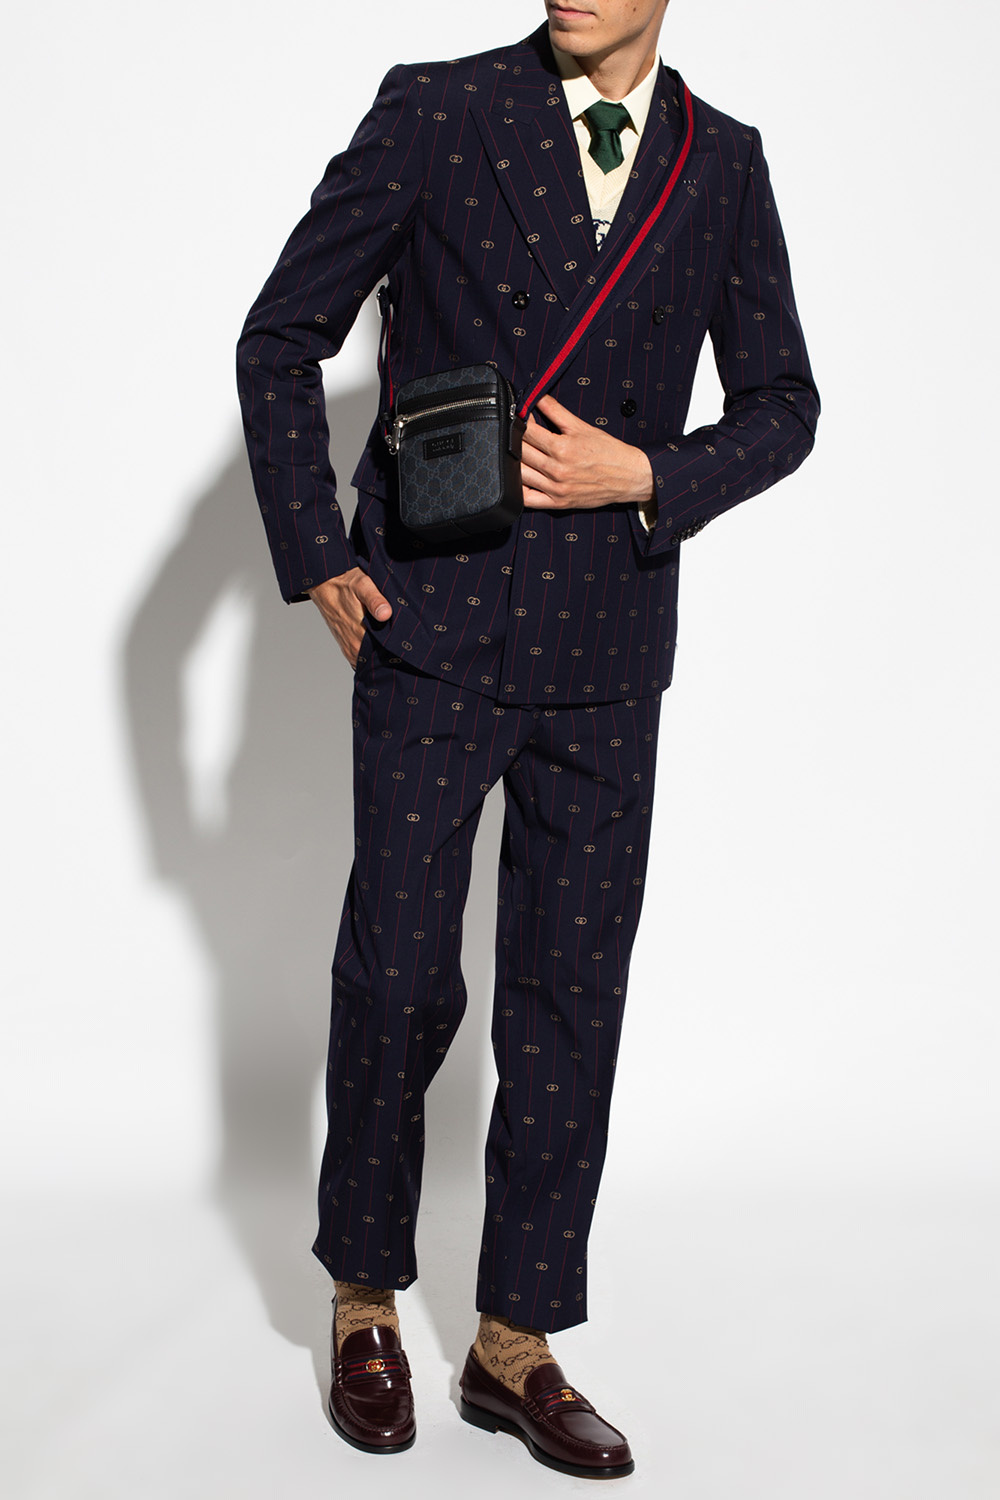 IetpShops | Gucci Suit with GG monogram | Men's Clothing 